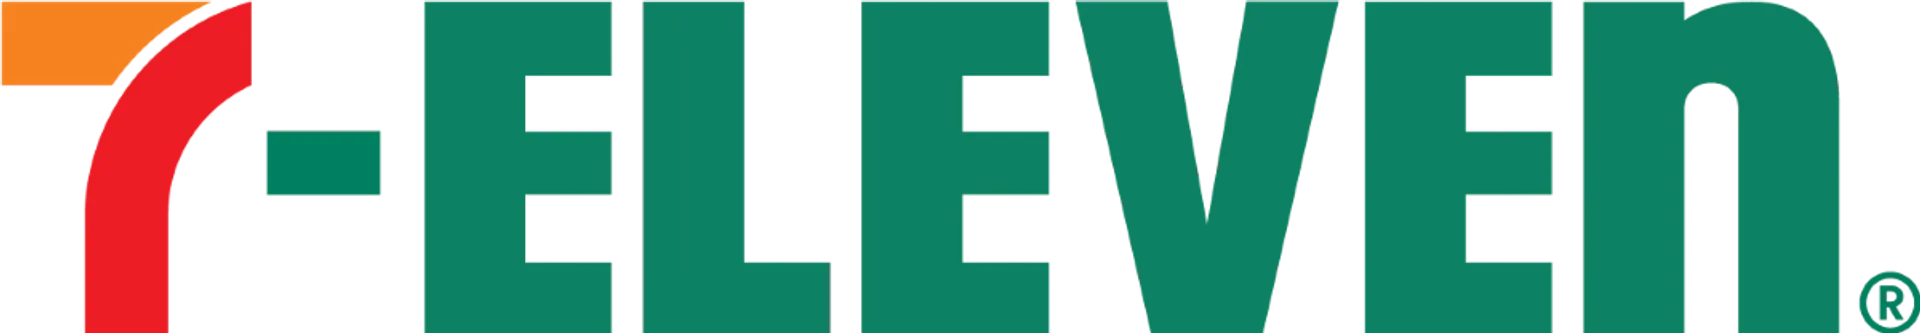 7-ELEVEN logo